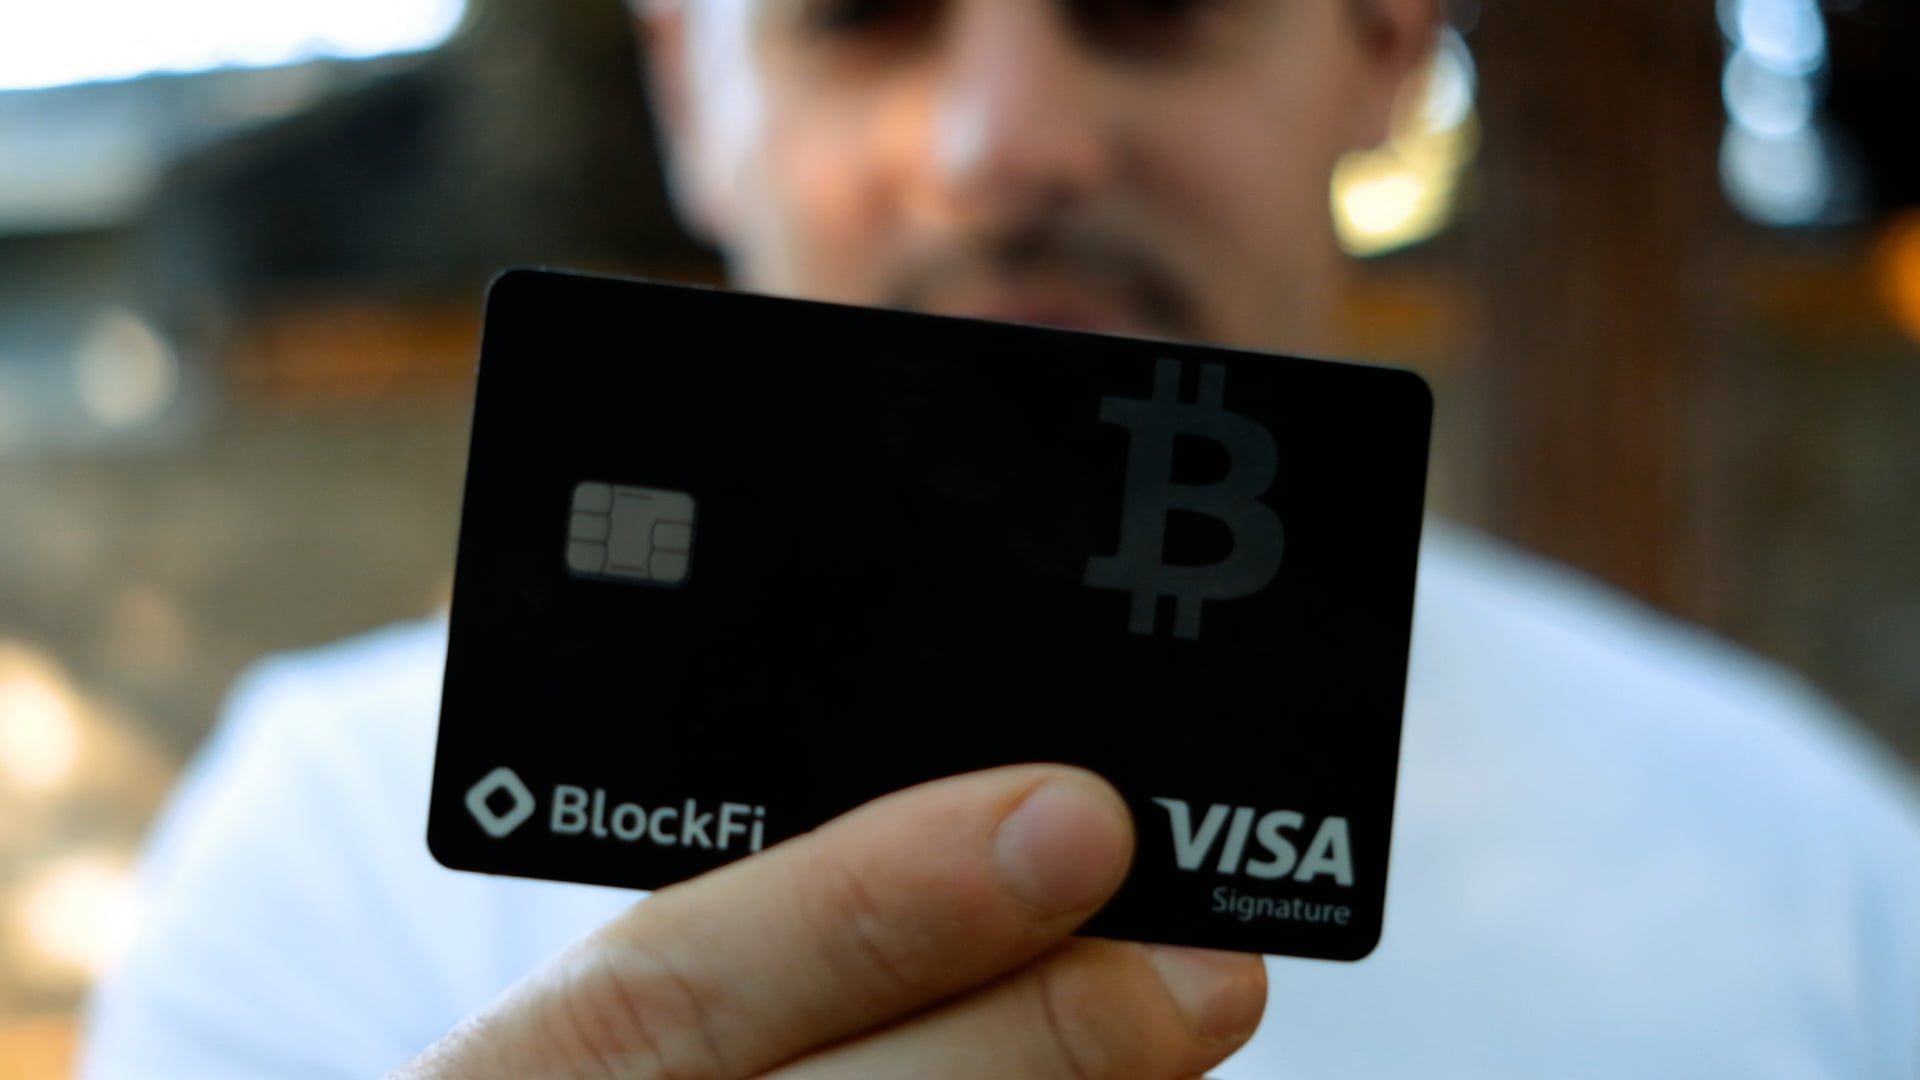 BlockFi Credit Card